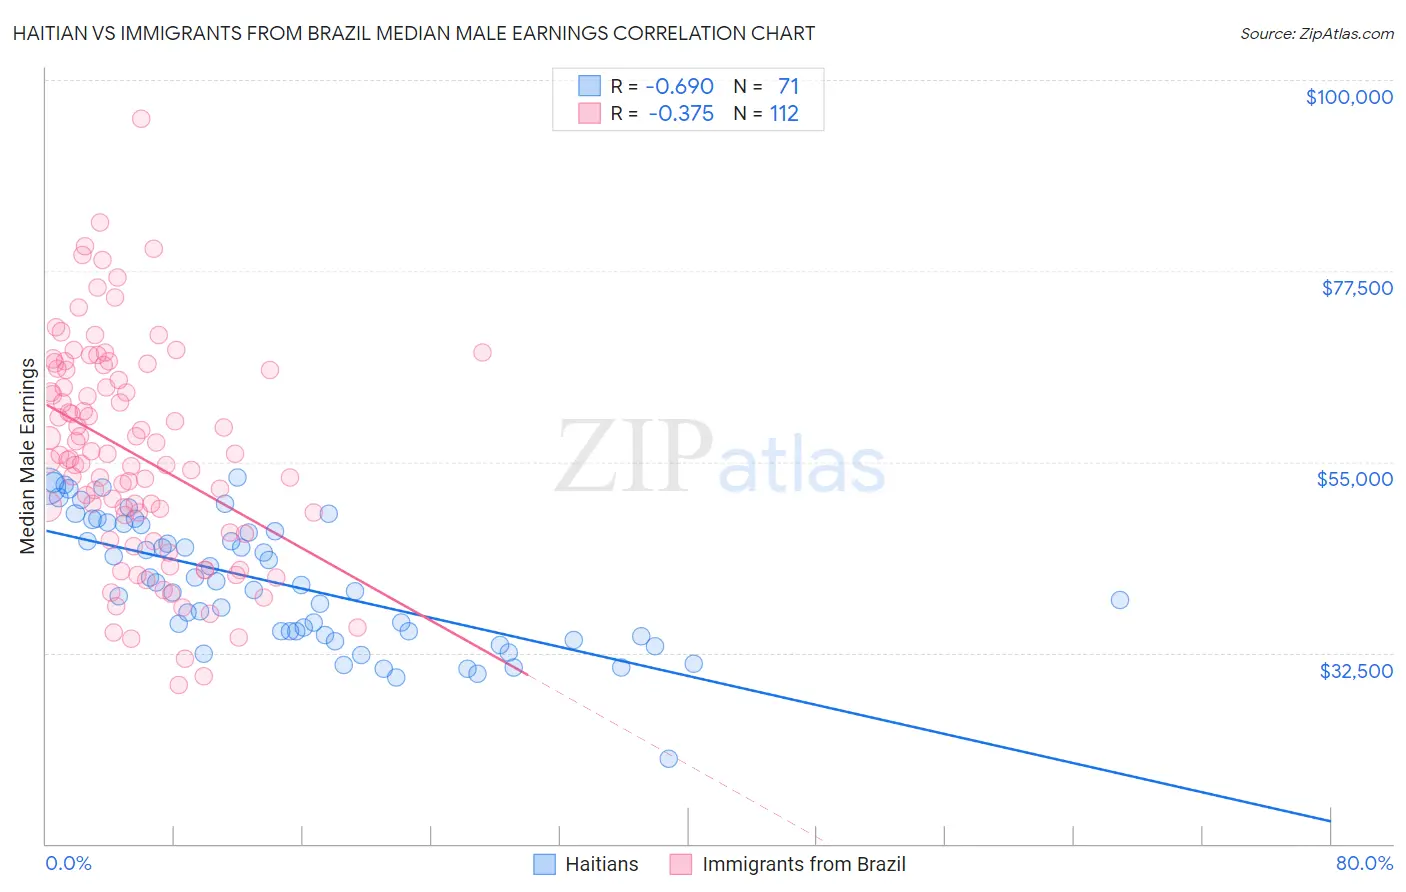 Haitian vs Immigrants from Brazil Median Male Earnings